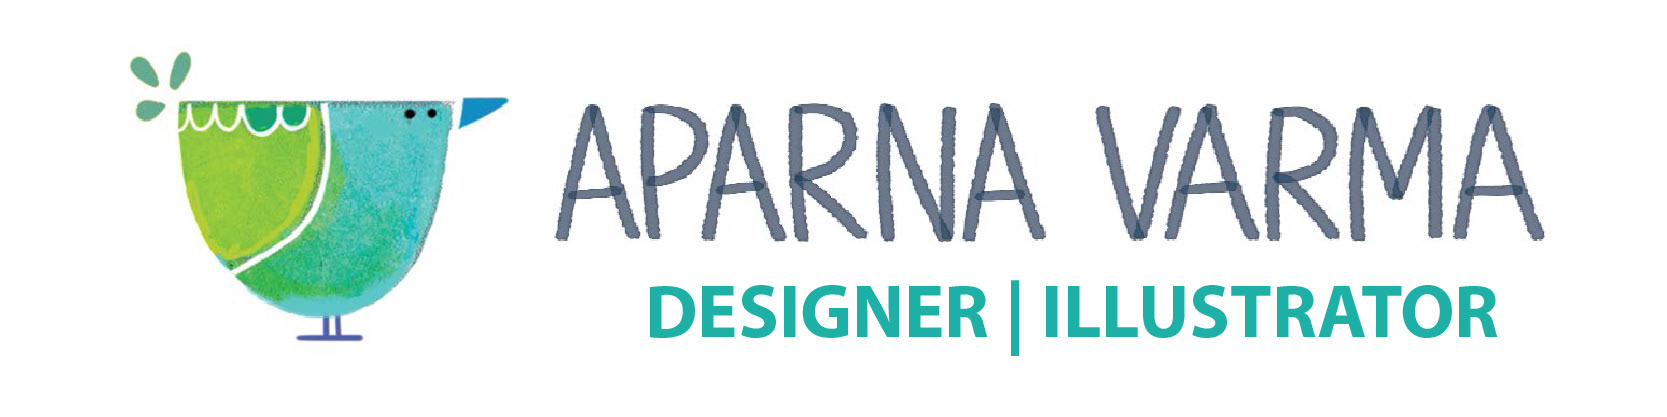 Aparna Varma - Designer - Illustrator